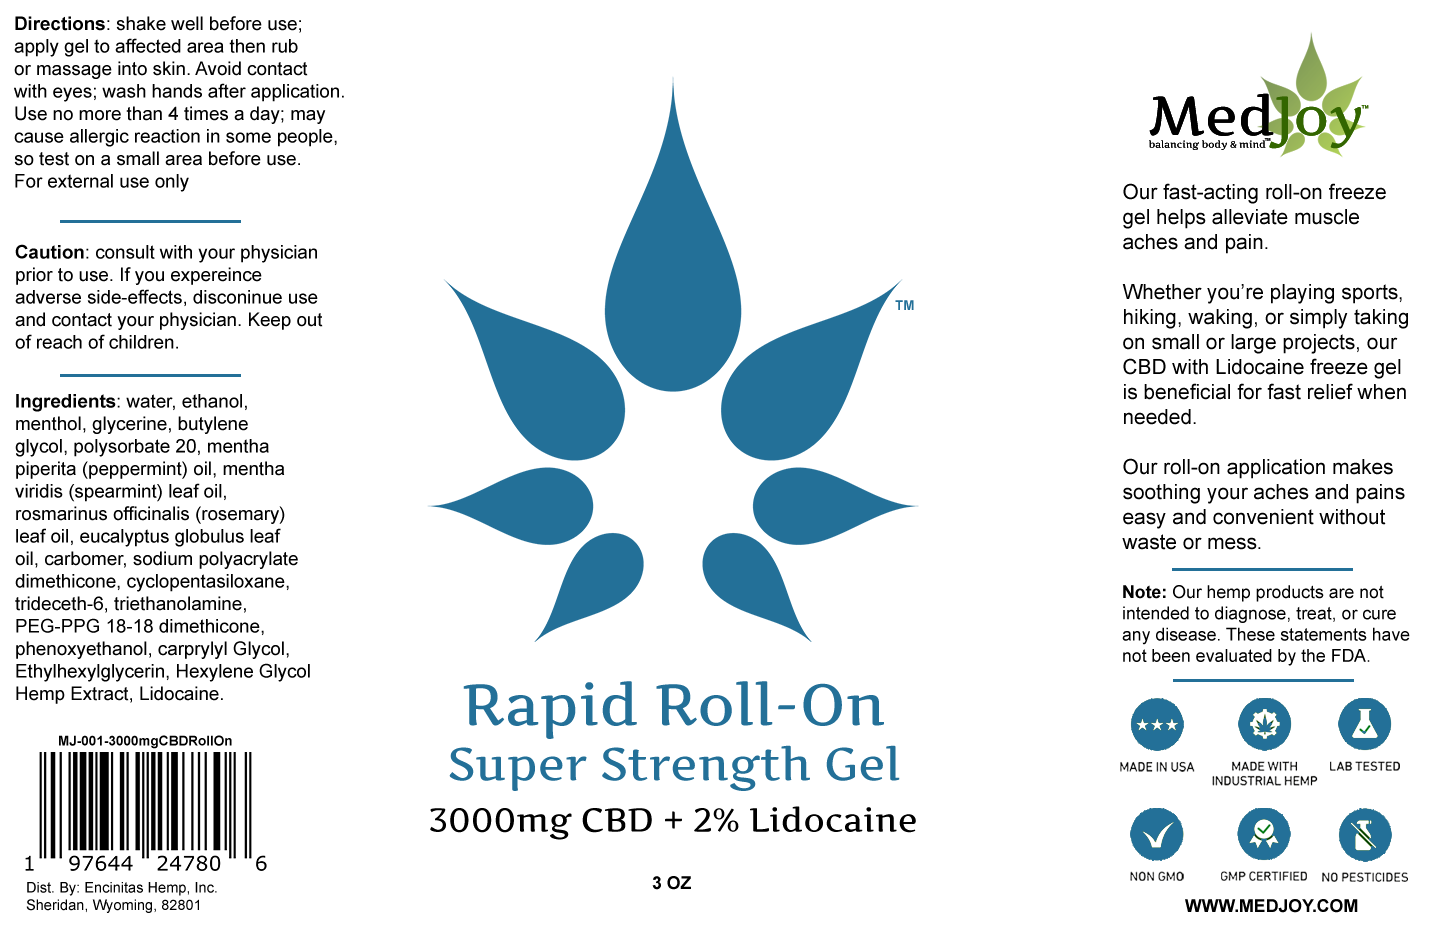 MedJoy™ Rapid Roll-On Super Strength Gel with 3000mg CBD & 2% Lidocaine - 3 oz